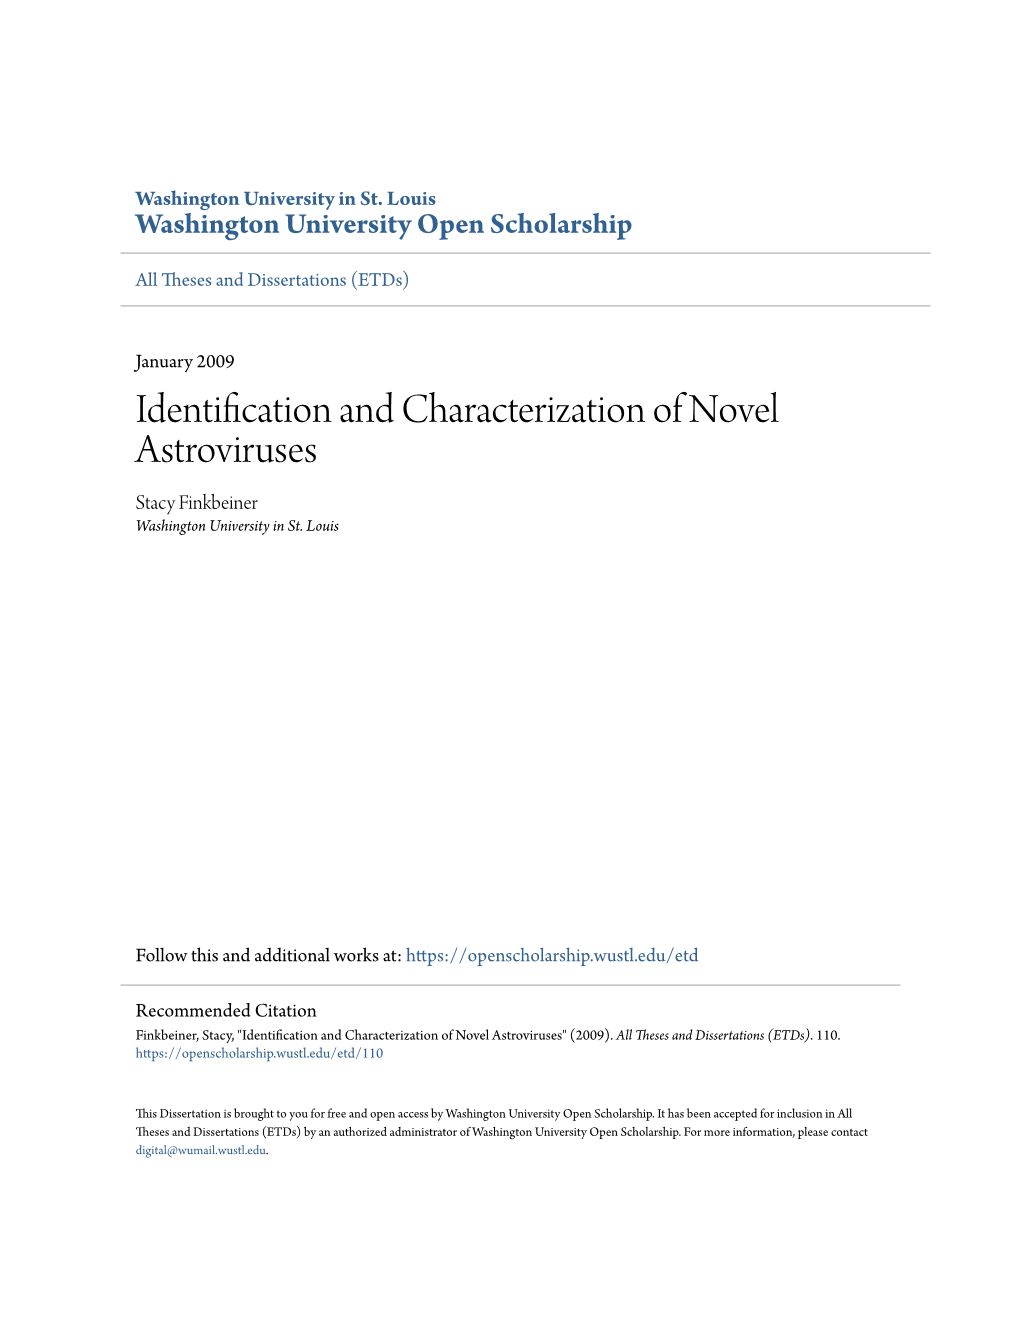 Identification and Characterization of Novel Astroviruses Stacy Finkbeiner Washington University in St